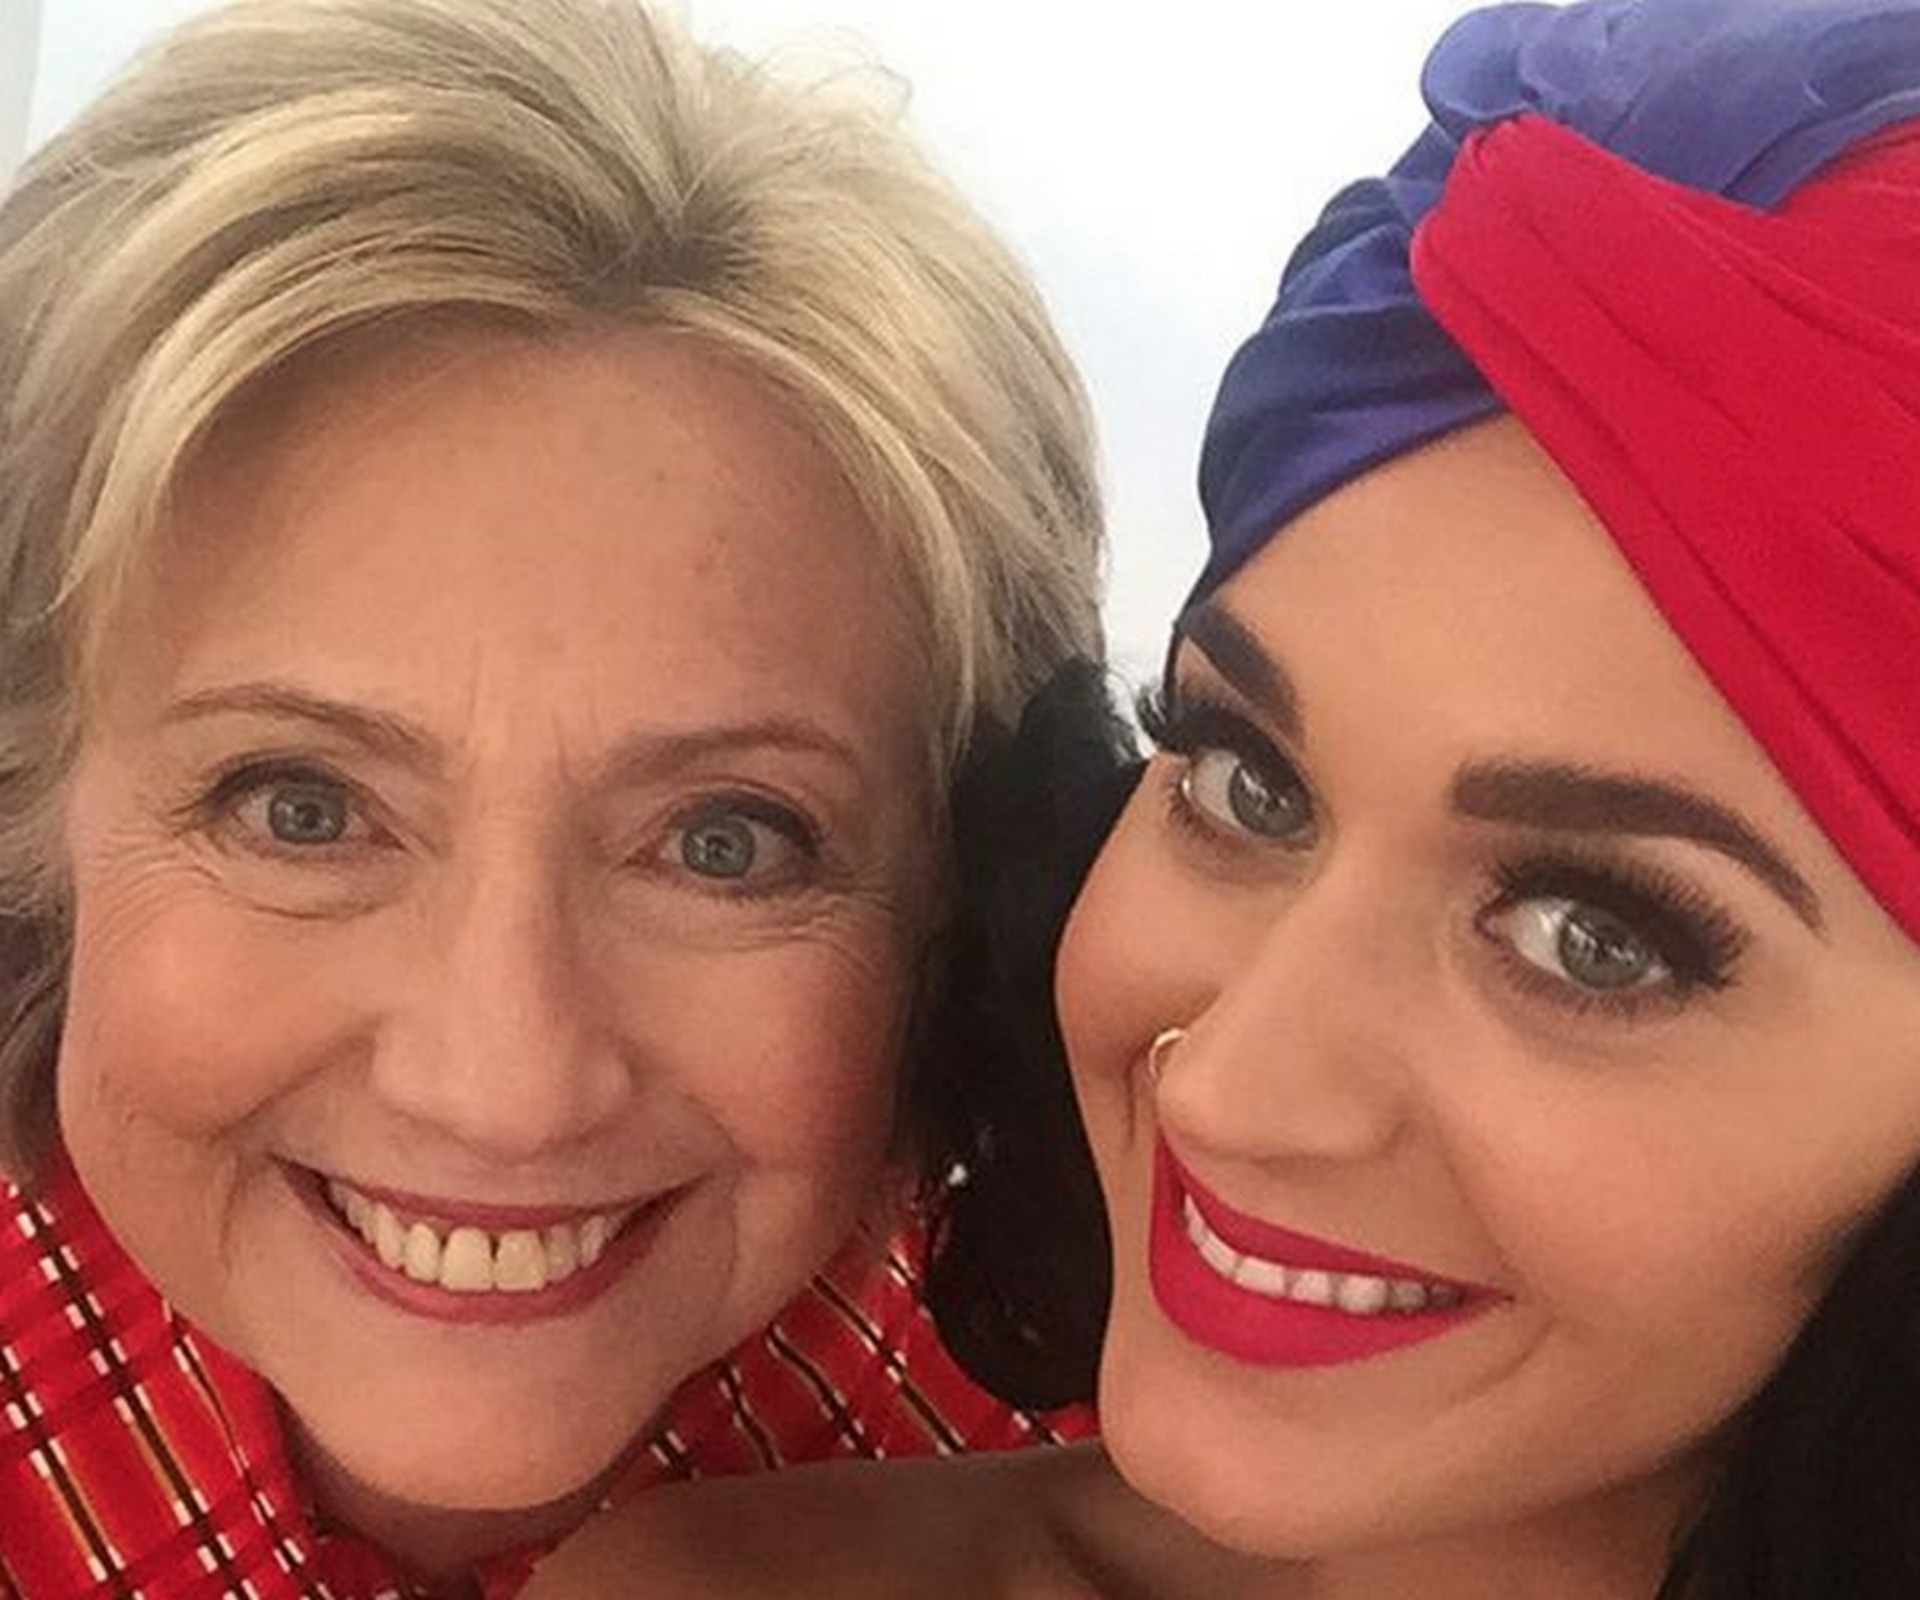 The leading ladies endorsing Hillary Clinton